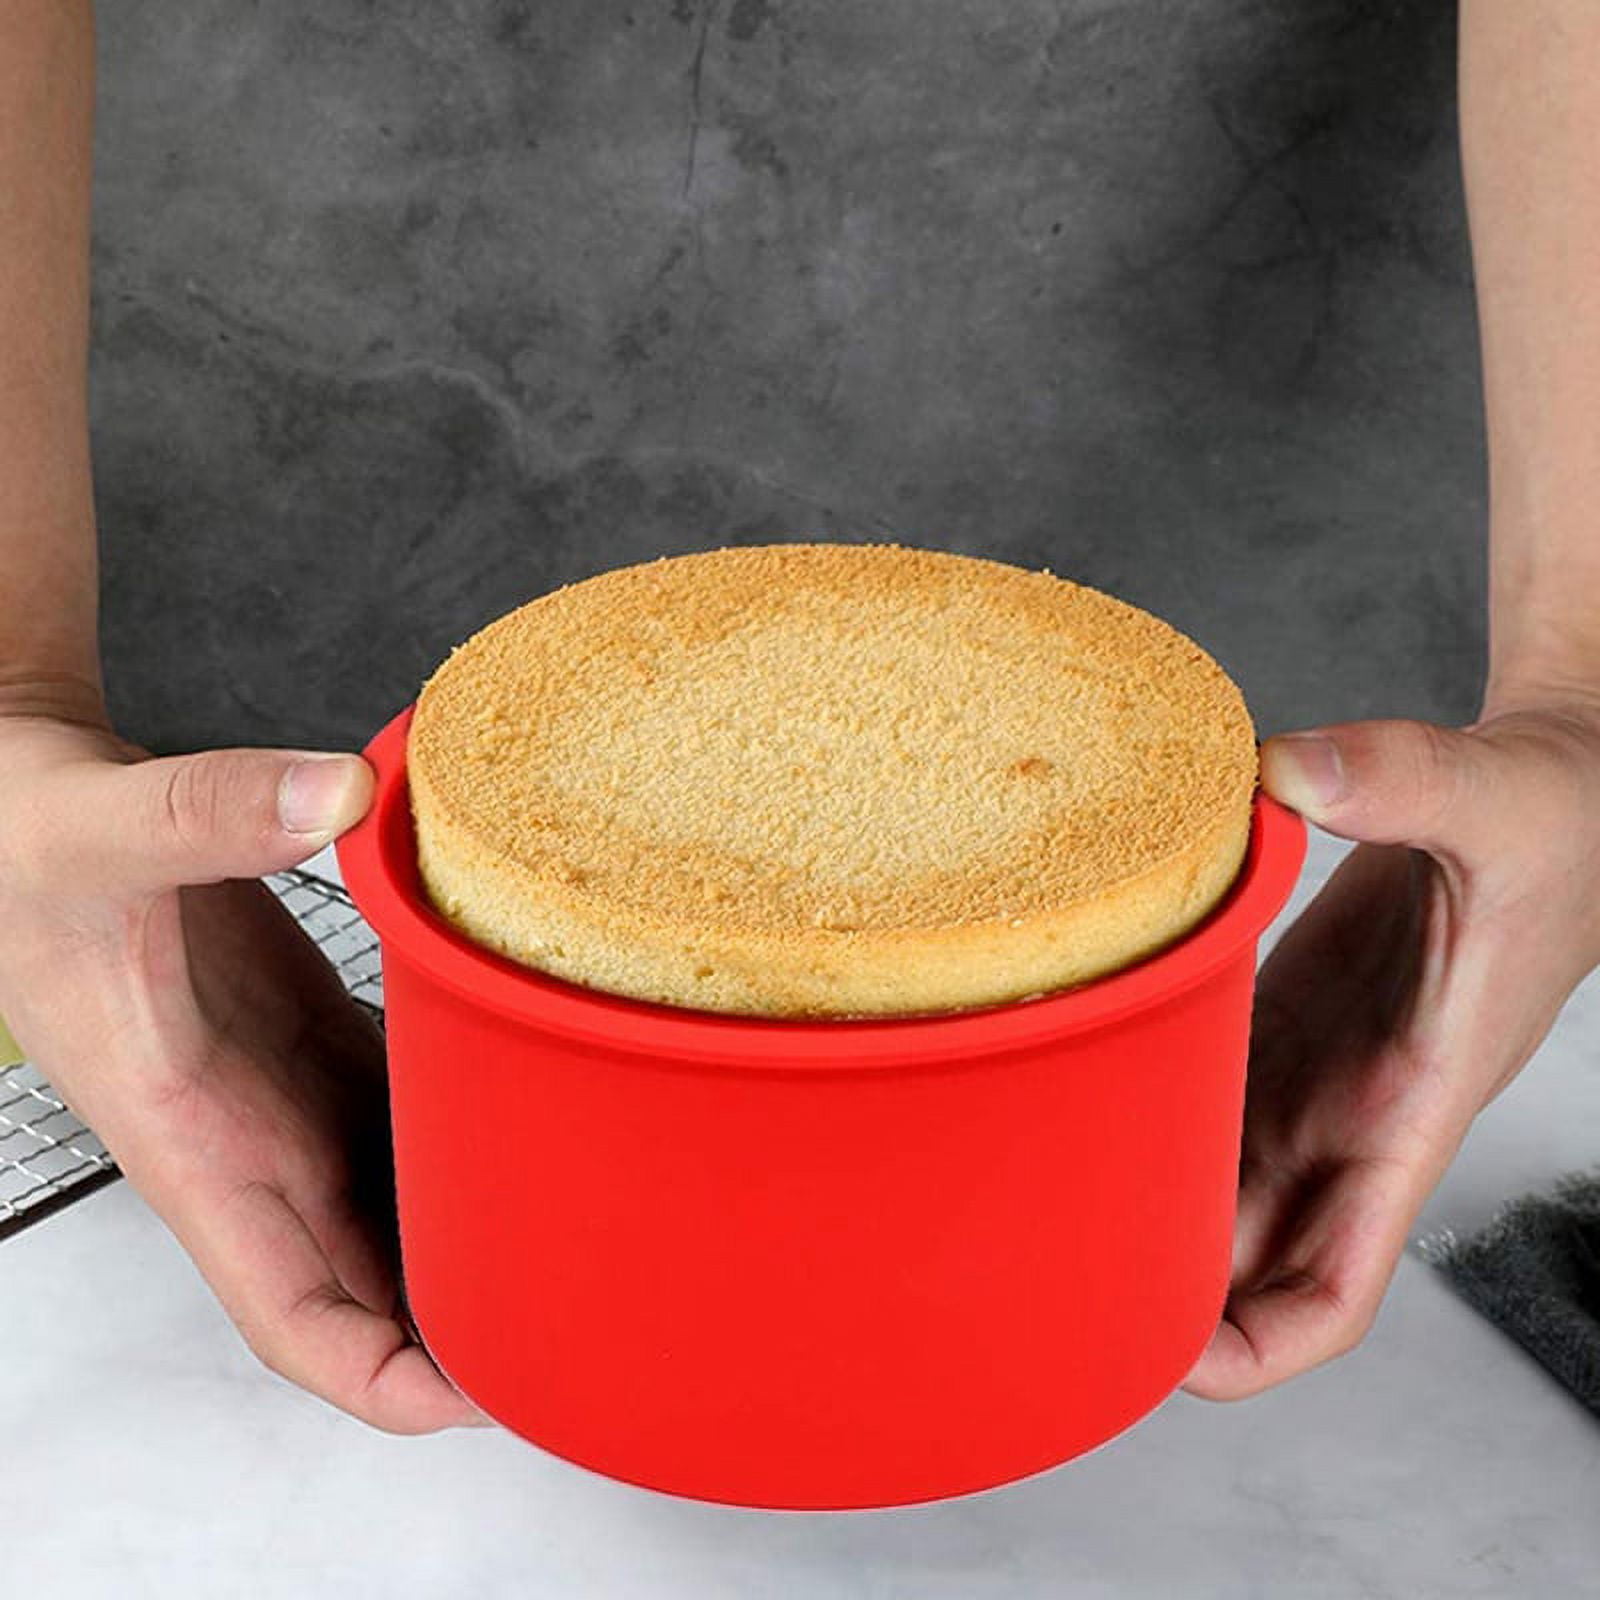  mifengda 12pcs Silicone Cake Mold Baking Round Cake Molds 4  Inch Non-Stick Baking Pan Kitchen Silicone Cake Molds for Baking(Red, Blue,  4inch): Home & Kitchen